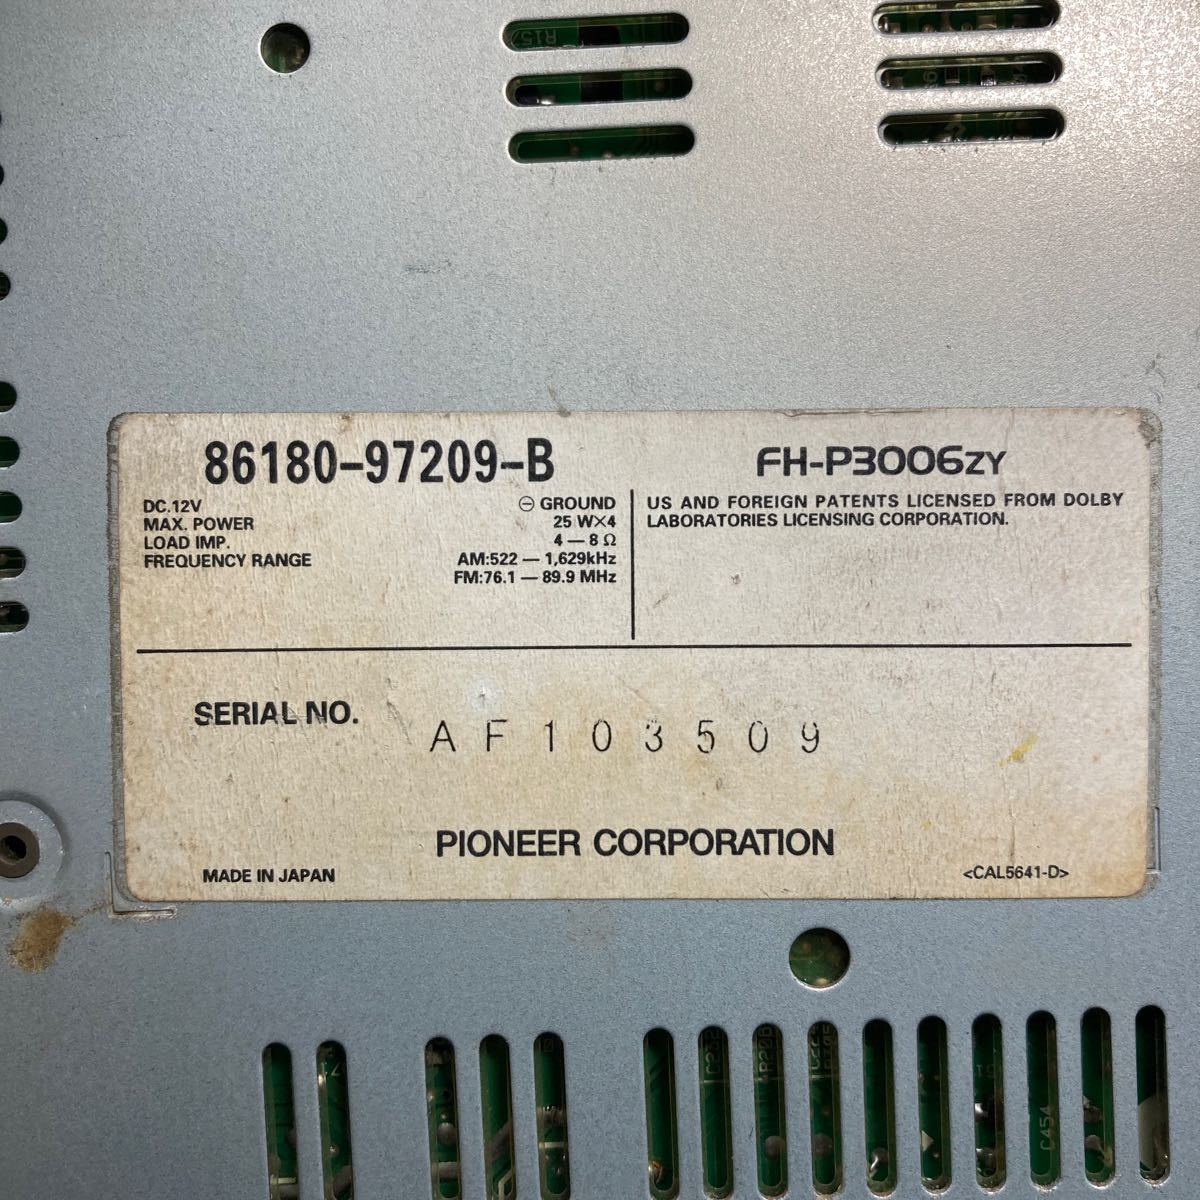 AV11-505 激安 カーステレオ Carrozzeria Pioneer FH-P3006ZY 86180-97209-B AF103509 CD MD 通電未確認 ジャンク_画像5